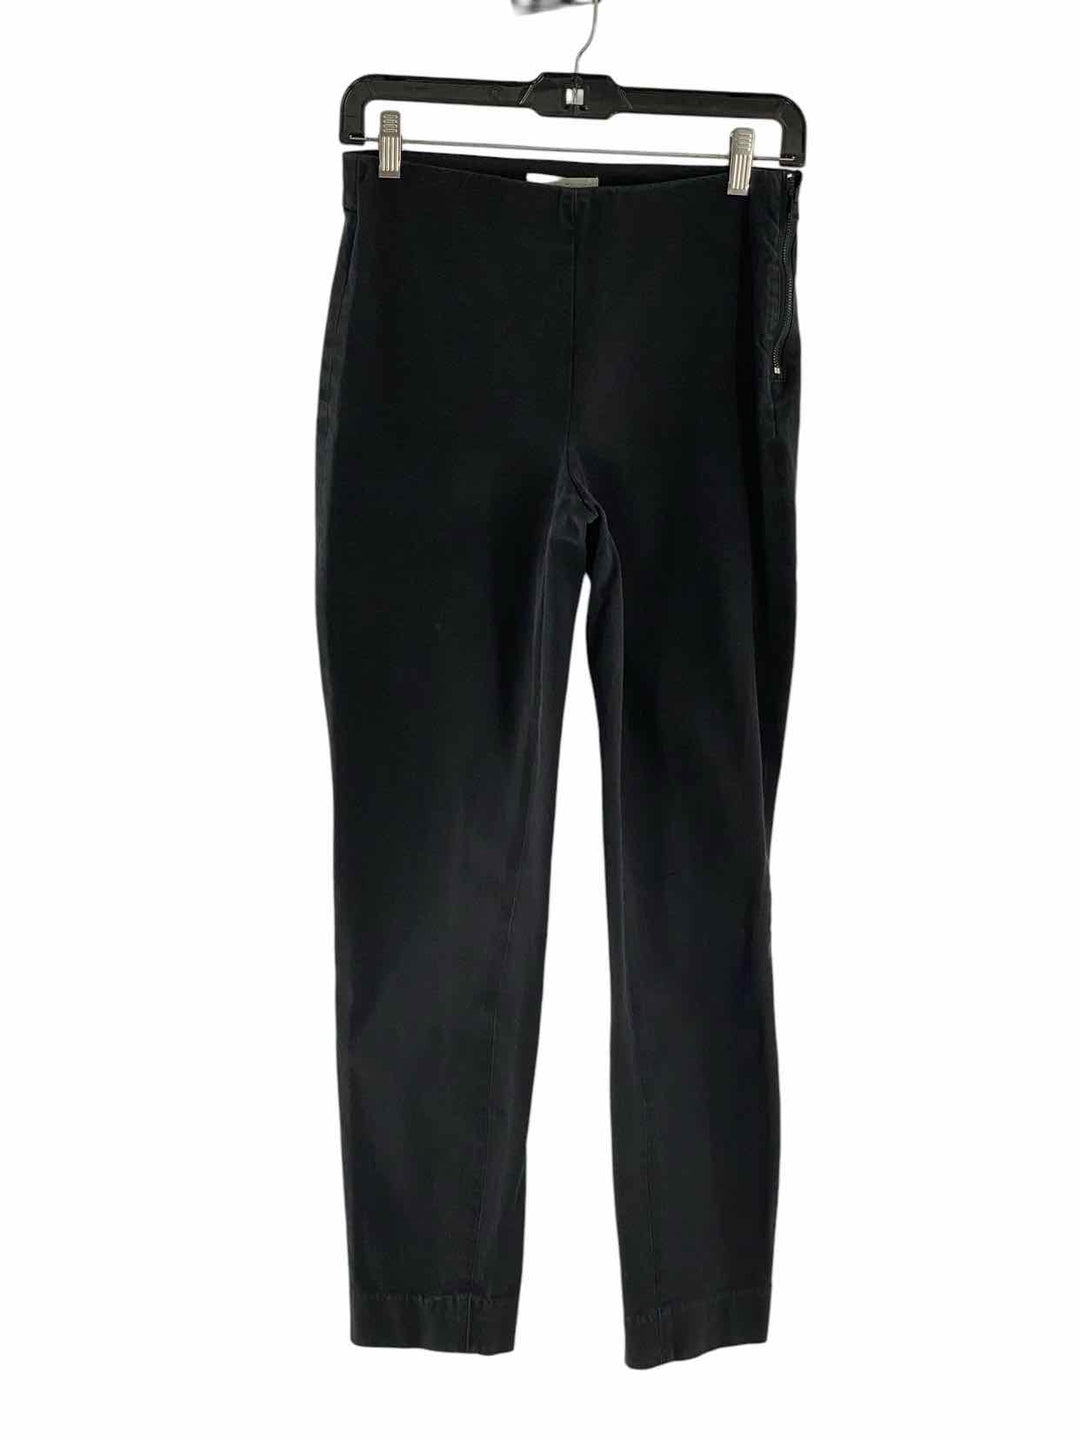 Everlane Size 4 Black Pants